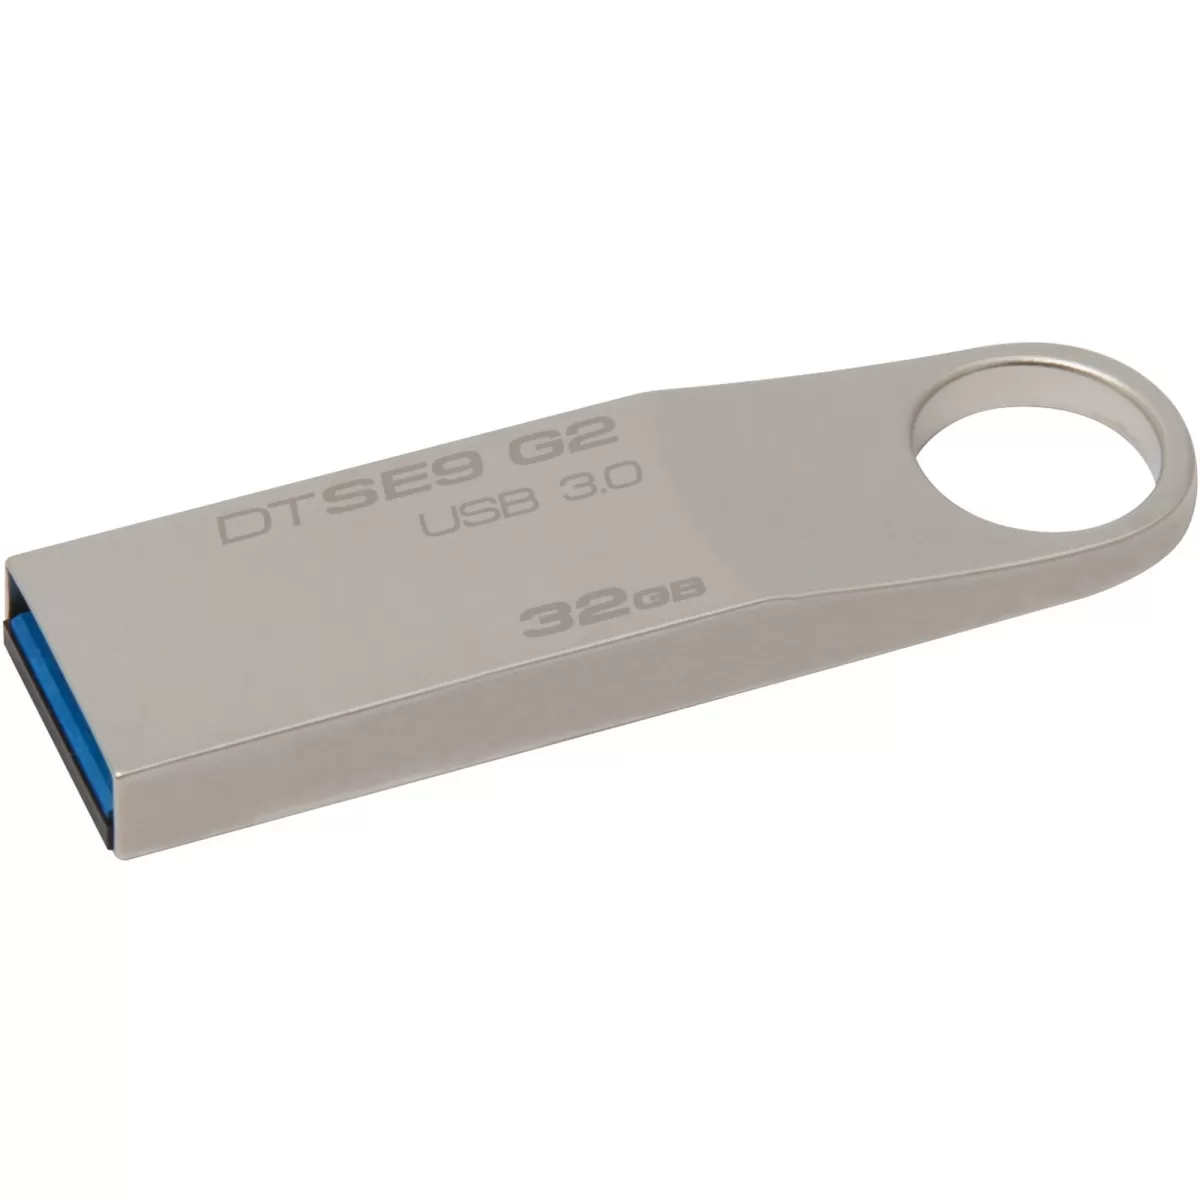 USB памет 32GB DTSE9G2 KINGSTON